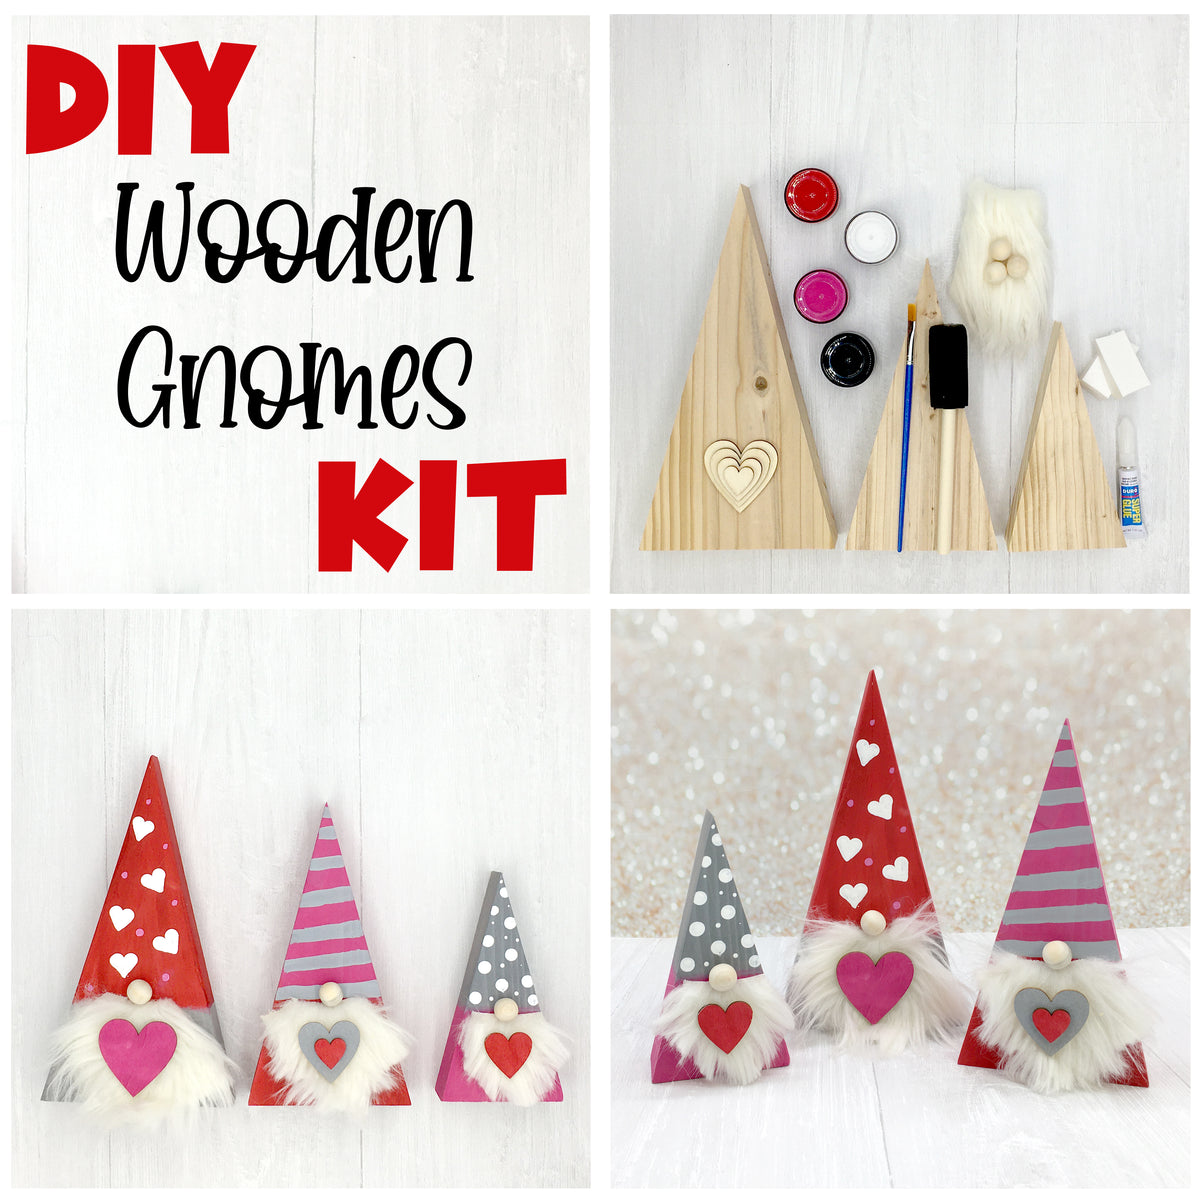 DIY Wooden Gnomes